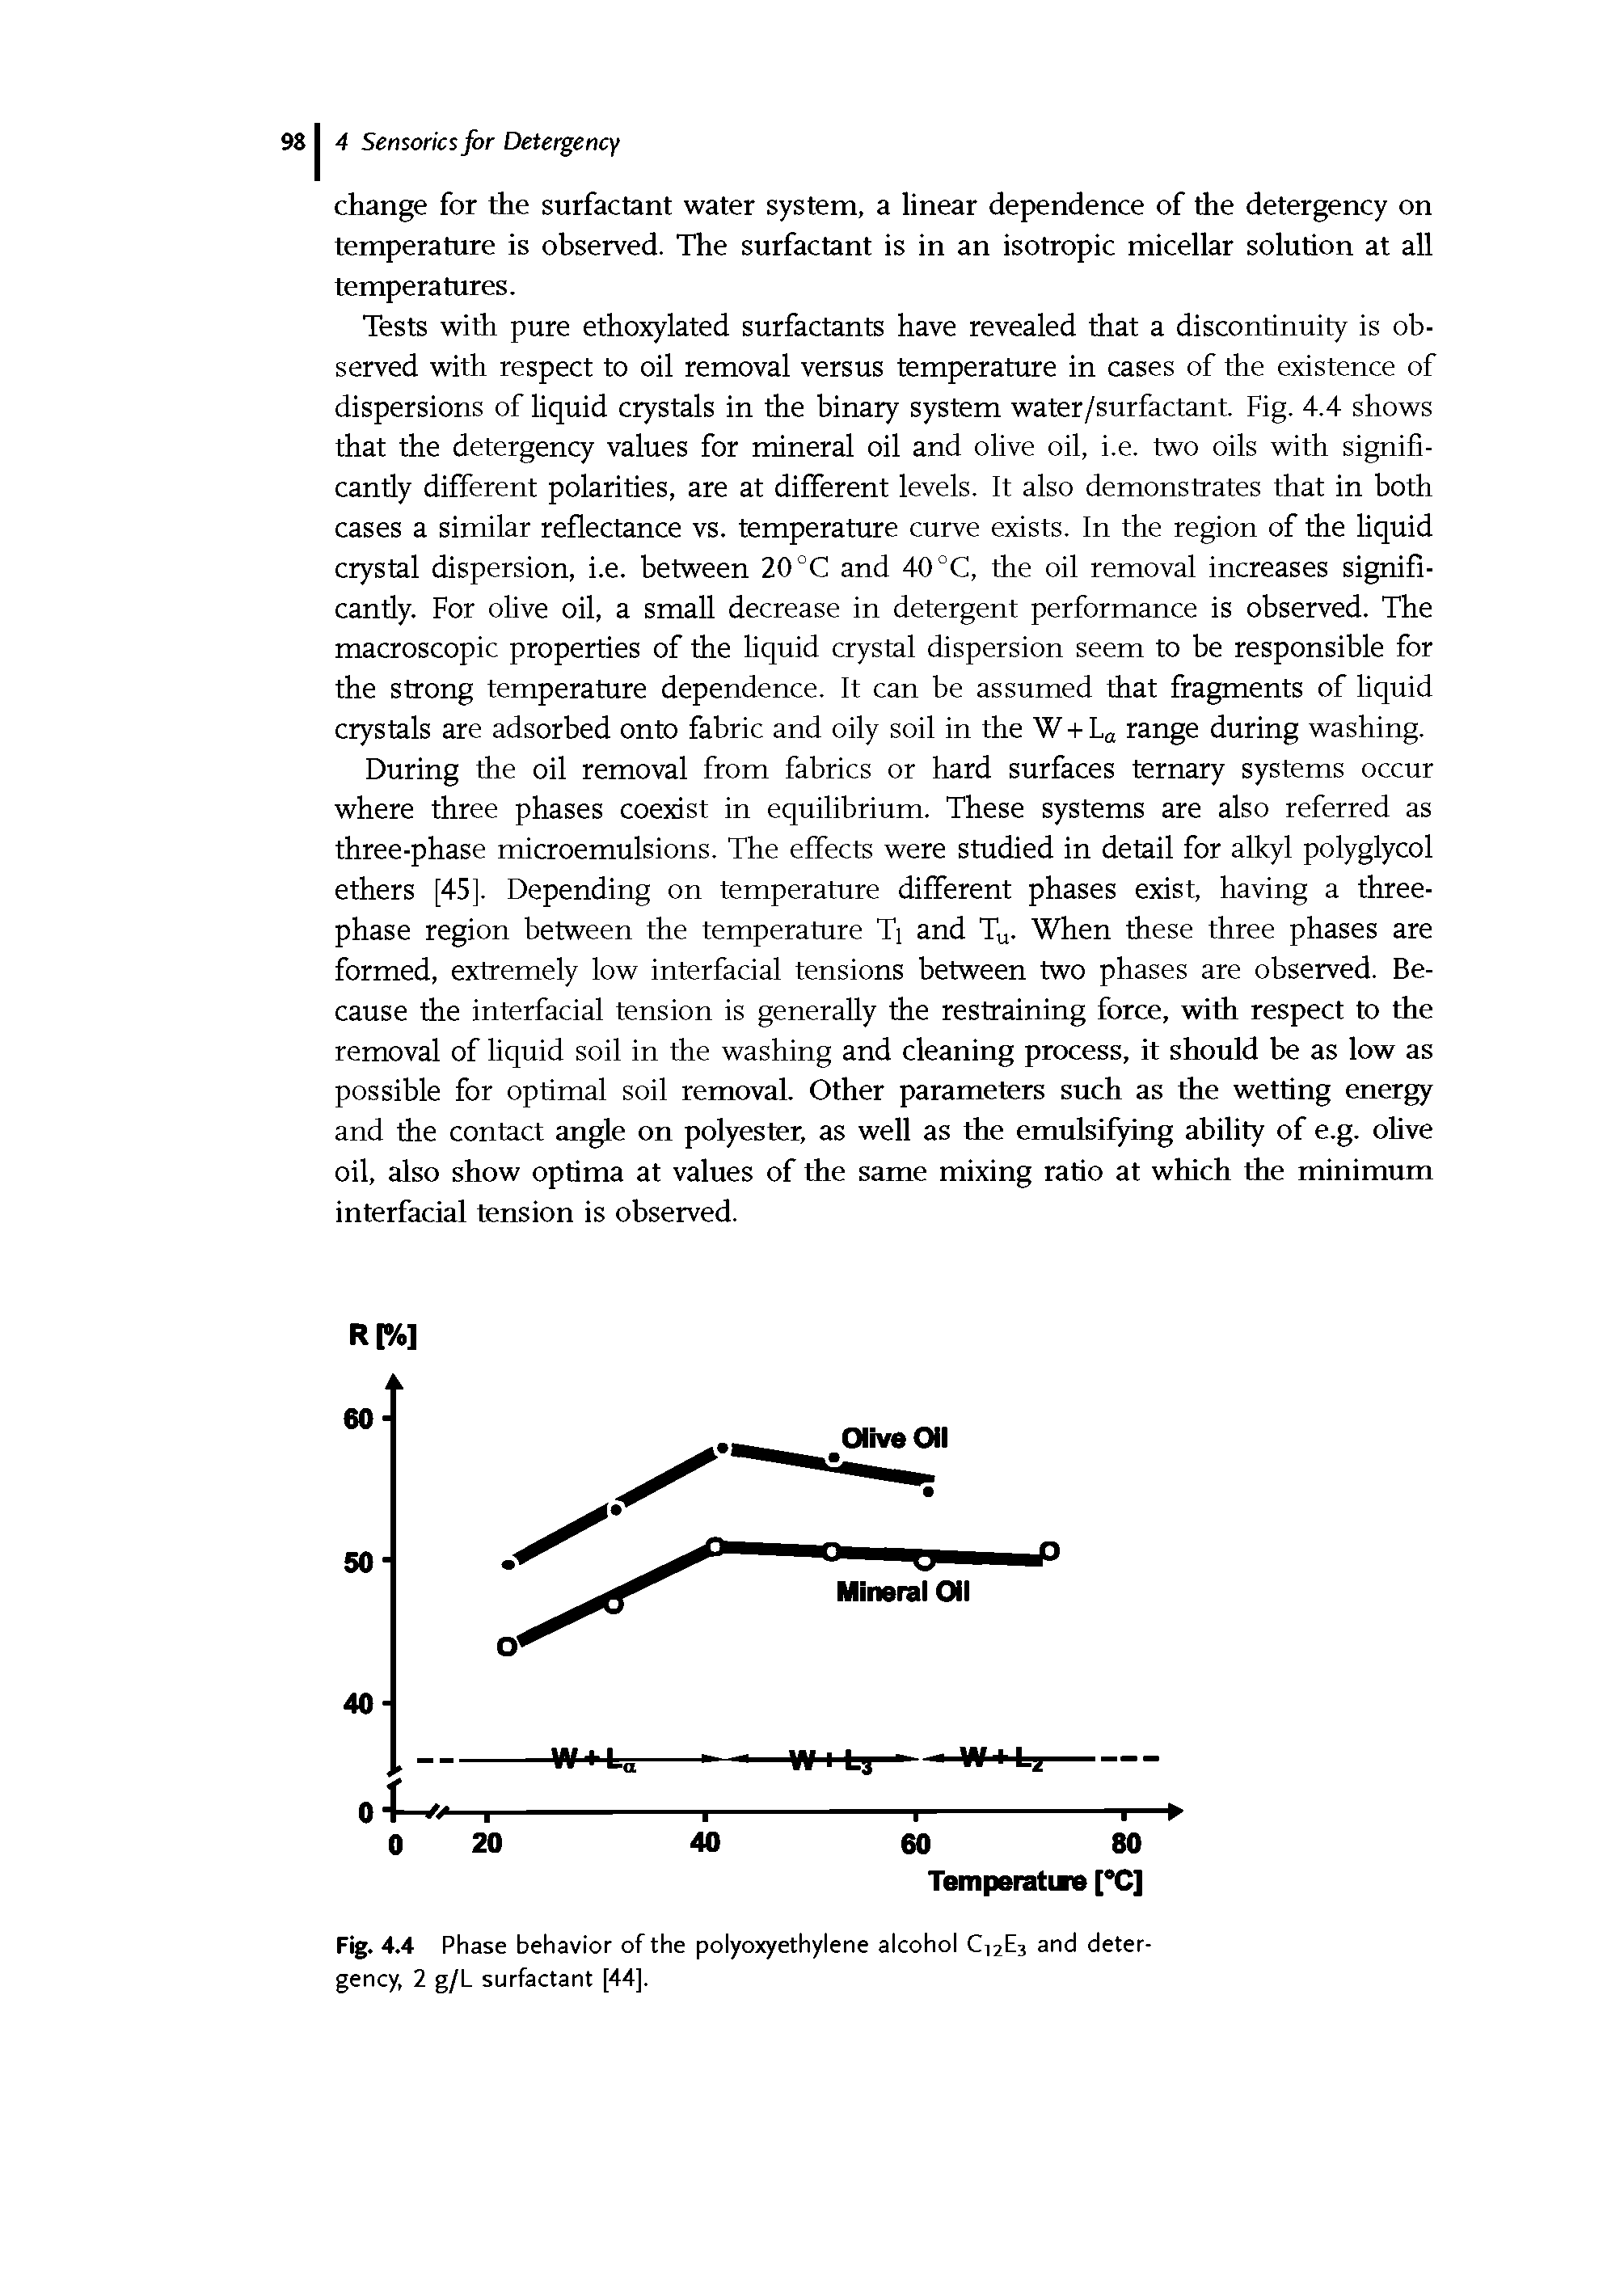 Fig. 4.4 Phase behavior of the polyoxyethylene alcohol Cn2E3 and detergency, 2 g/L surfactant [44].